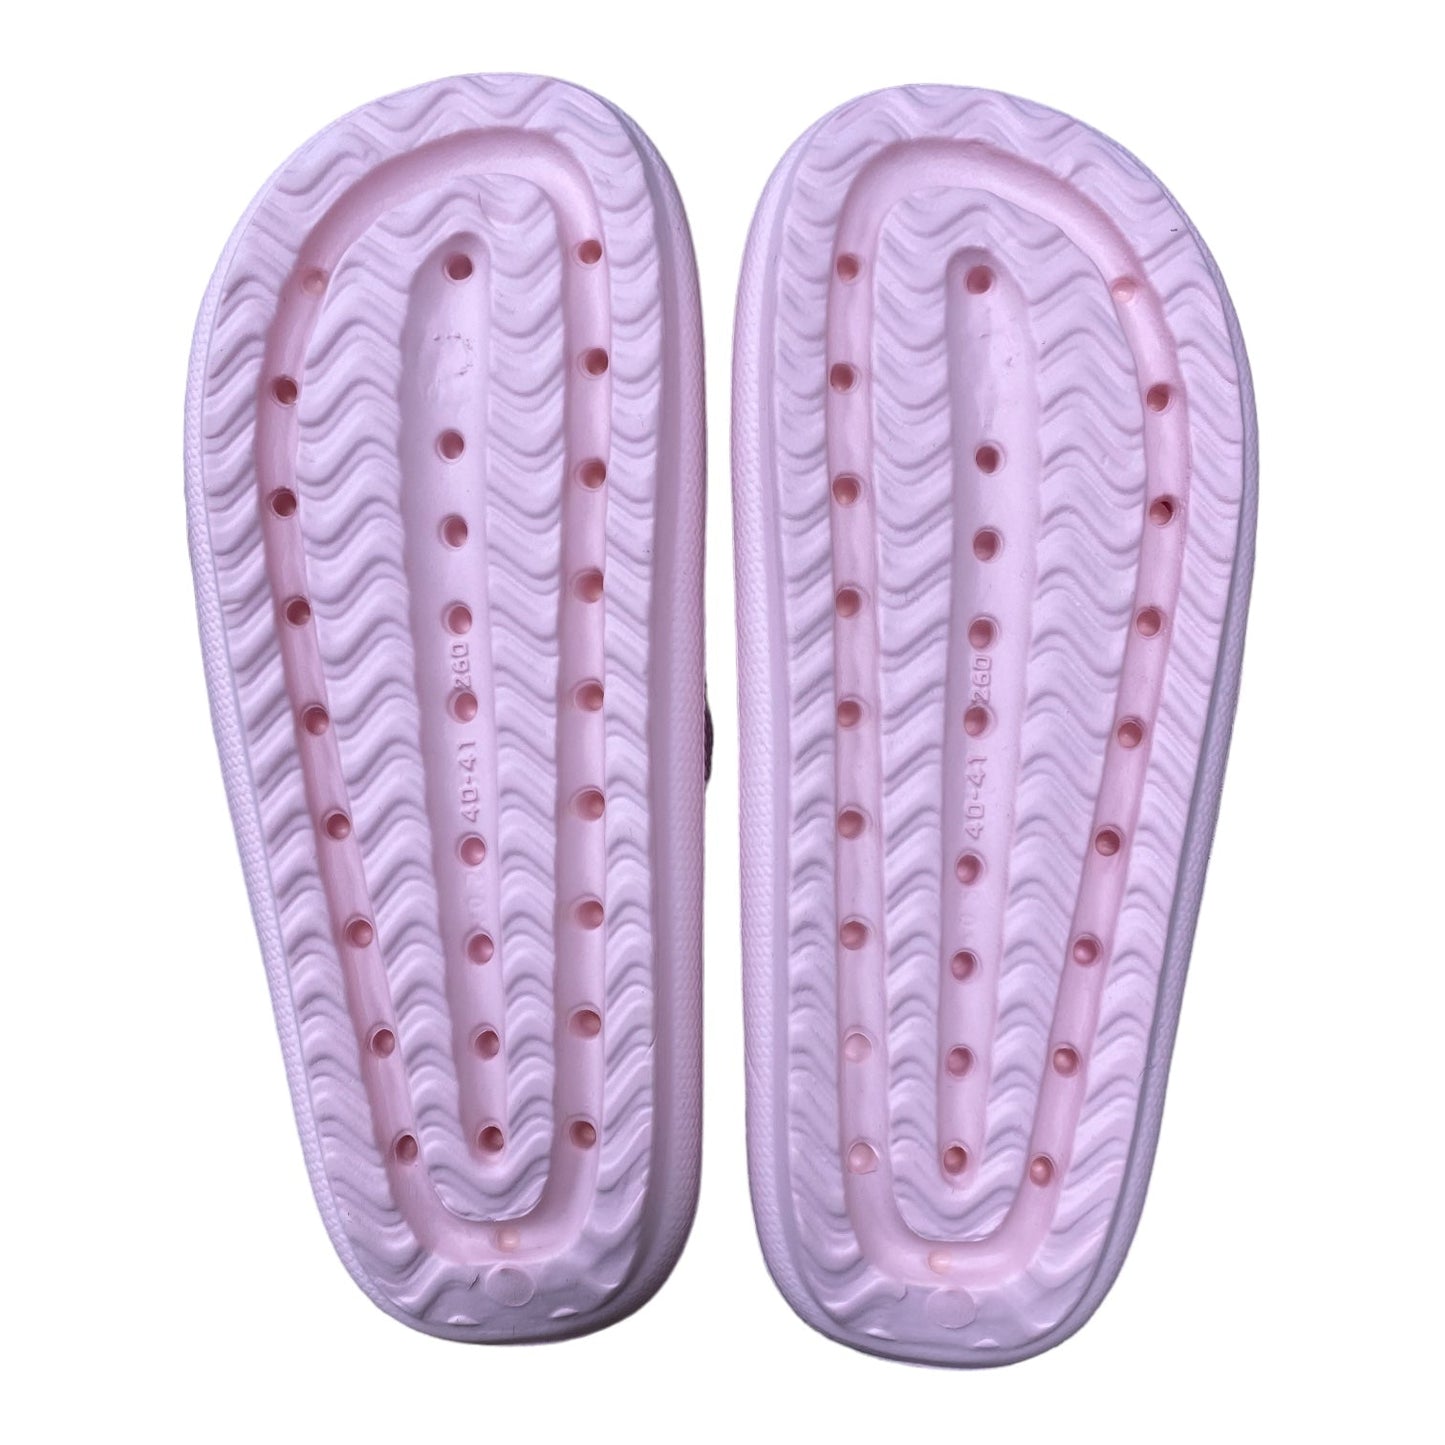 Pink Sandals Flats Clothes Mentor, Size 10